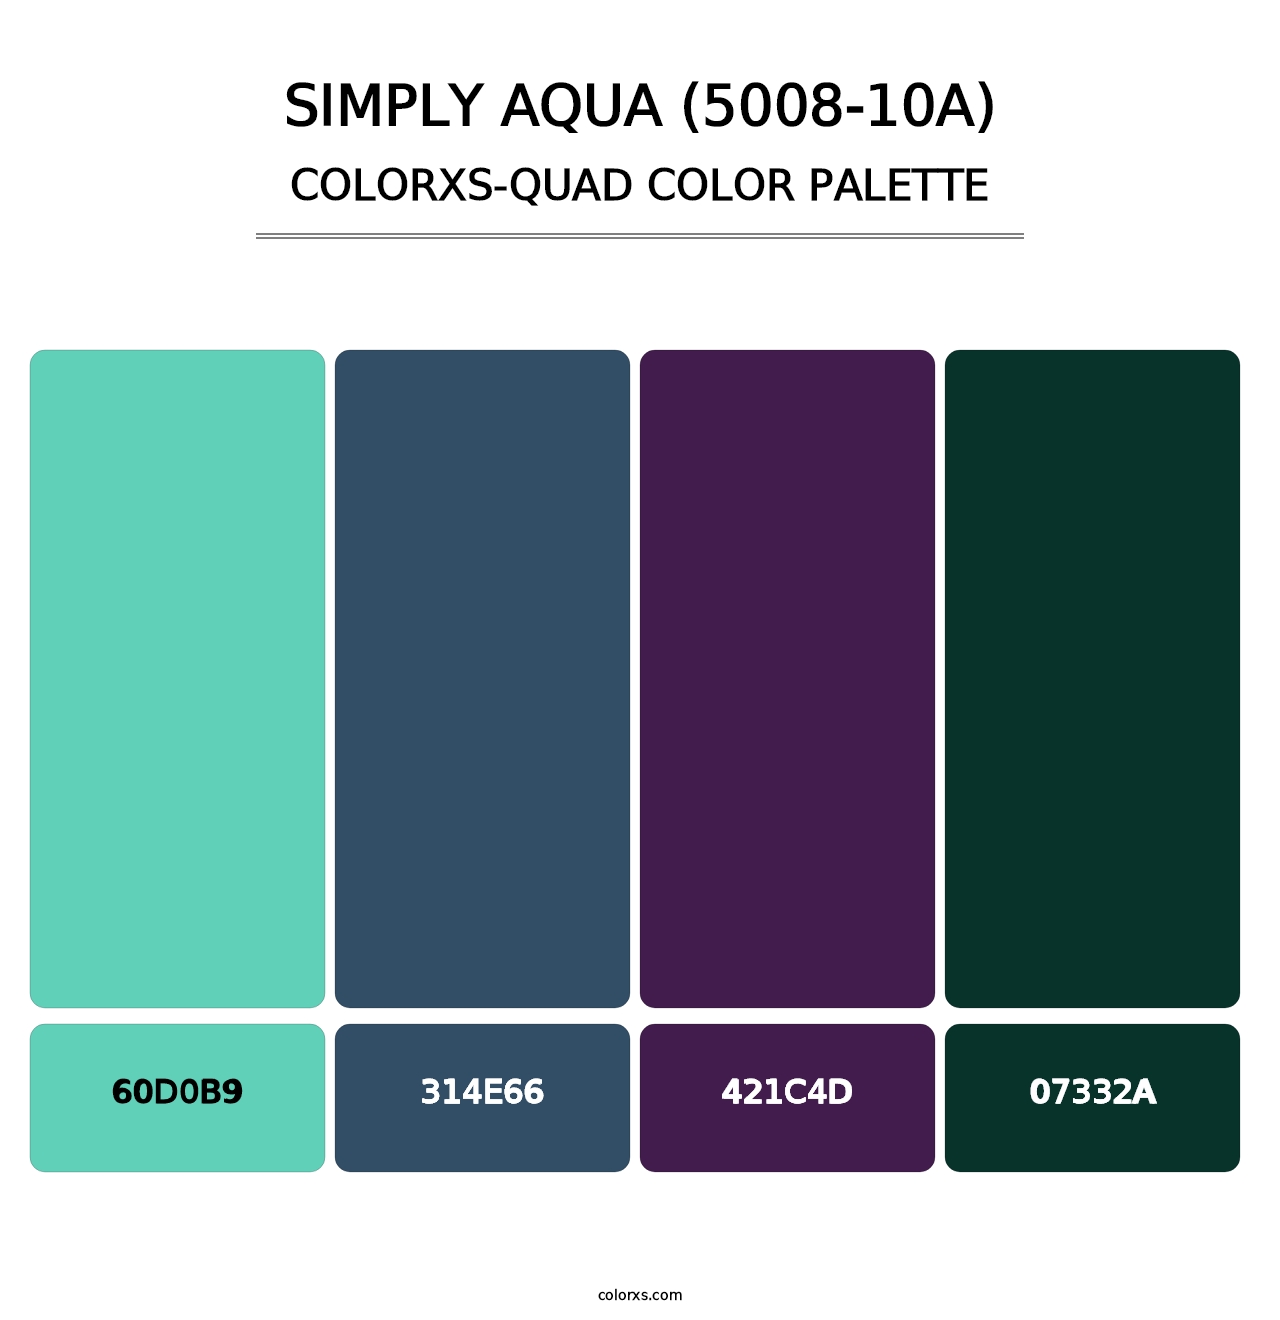 Simply Aqua (5008-10A) - Colorxs Quad Palette